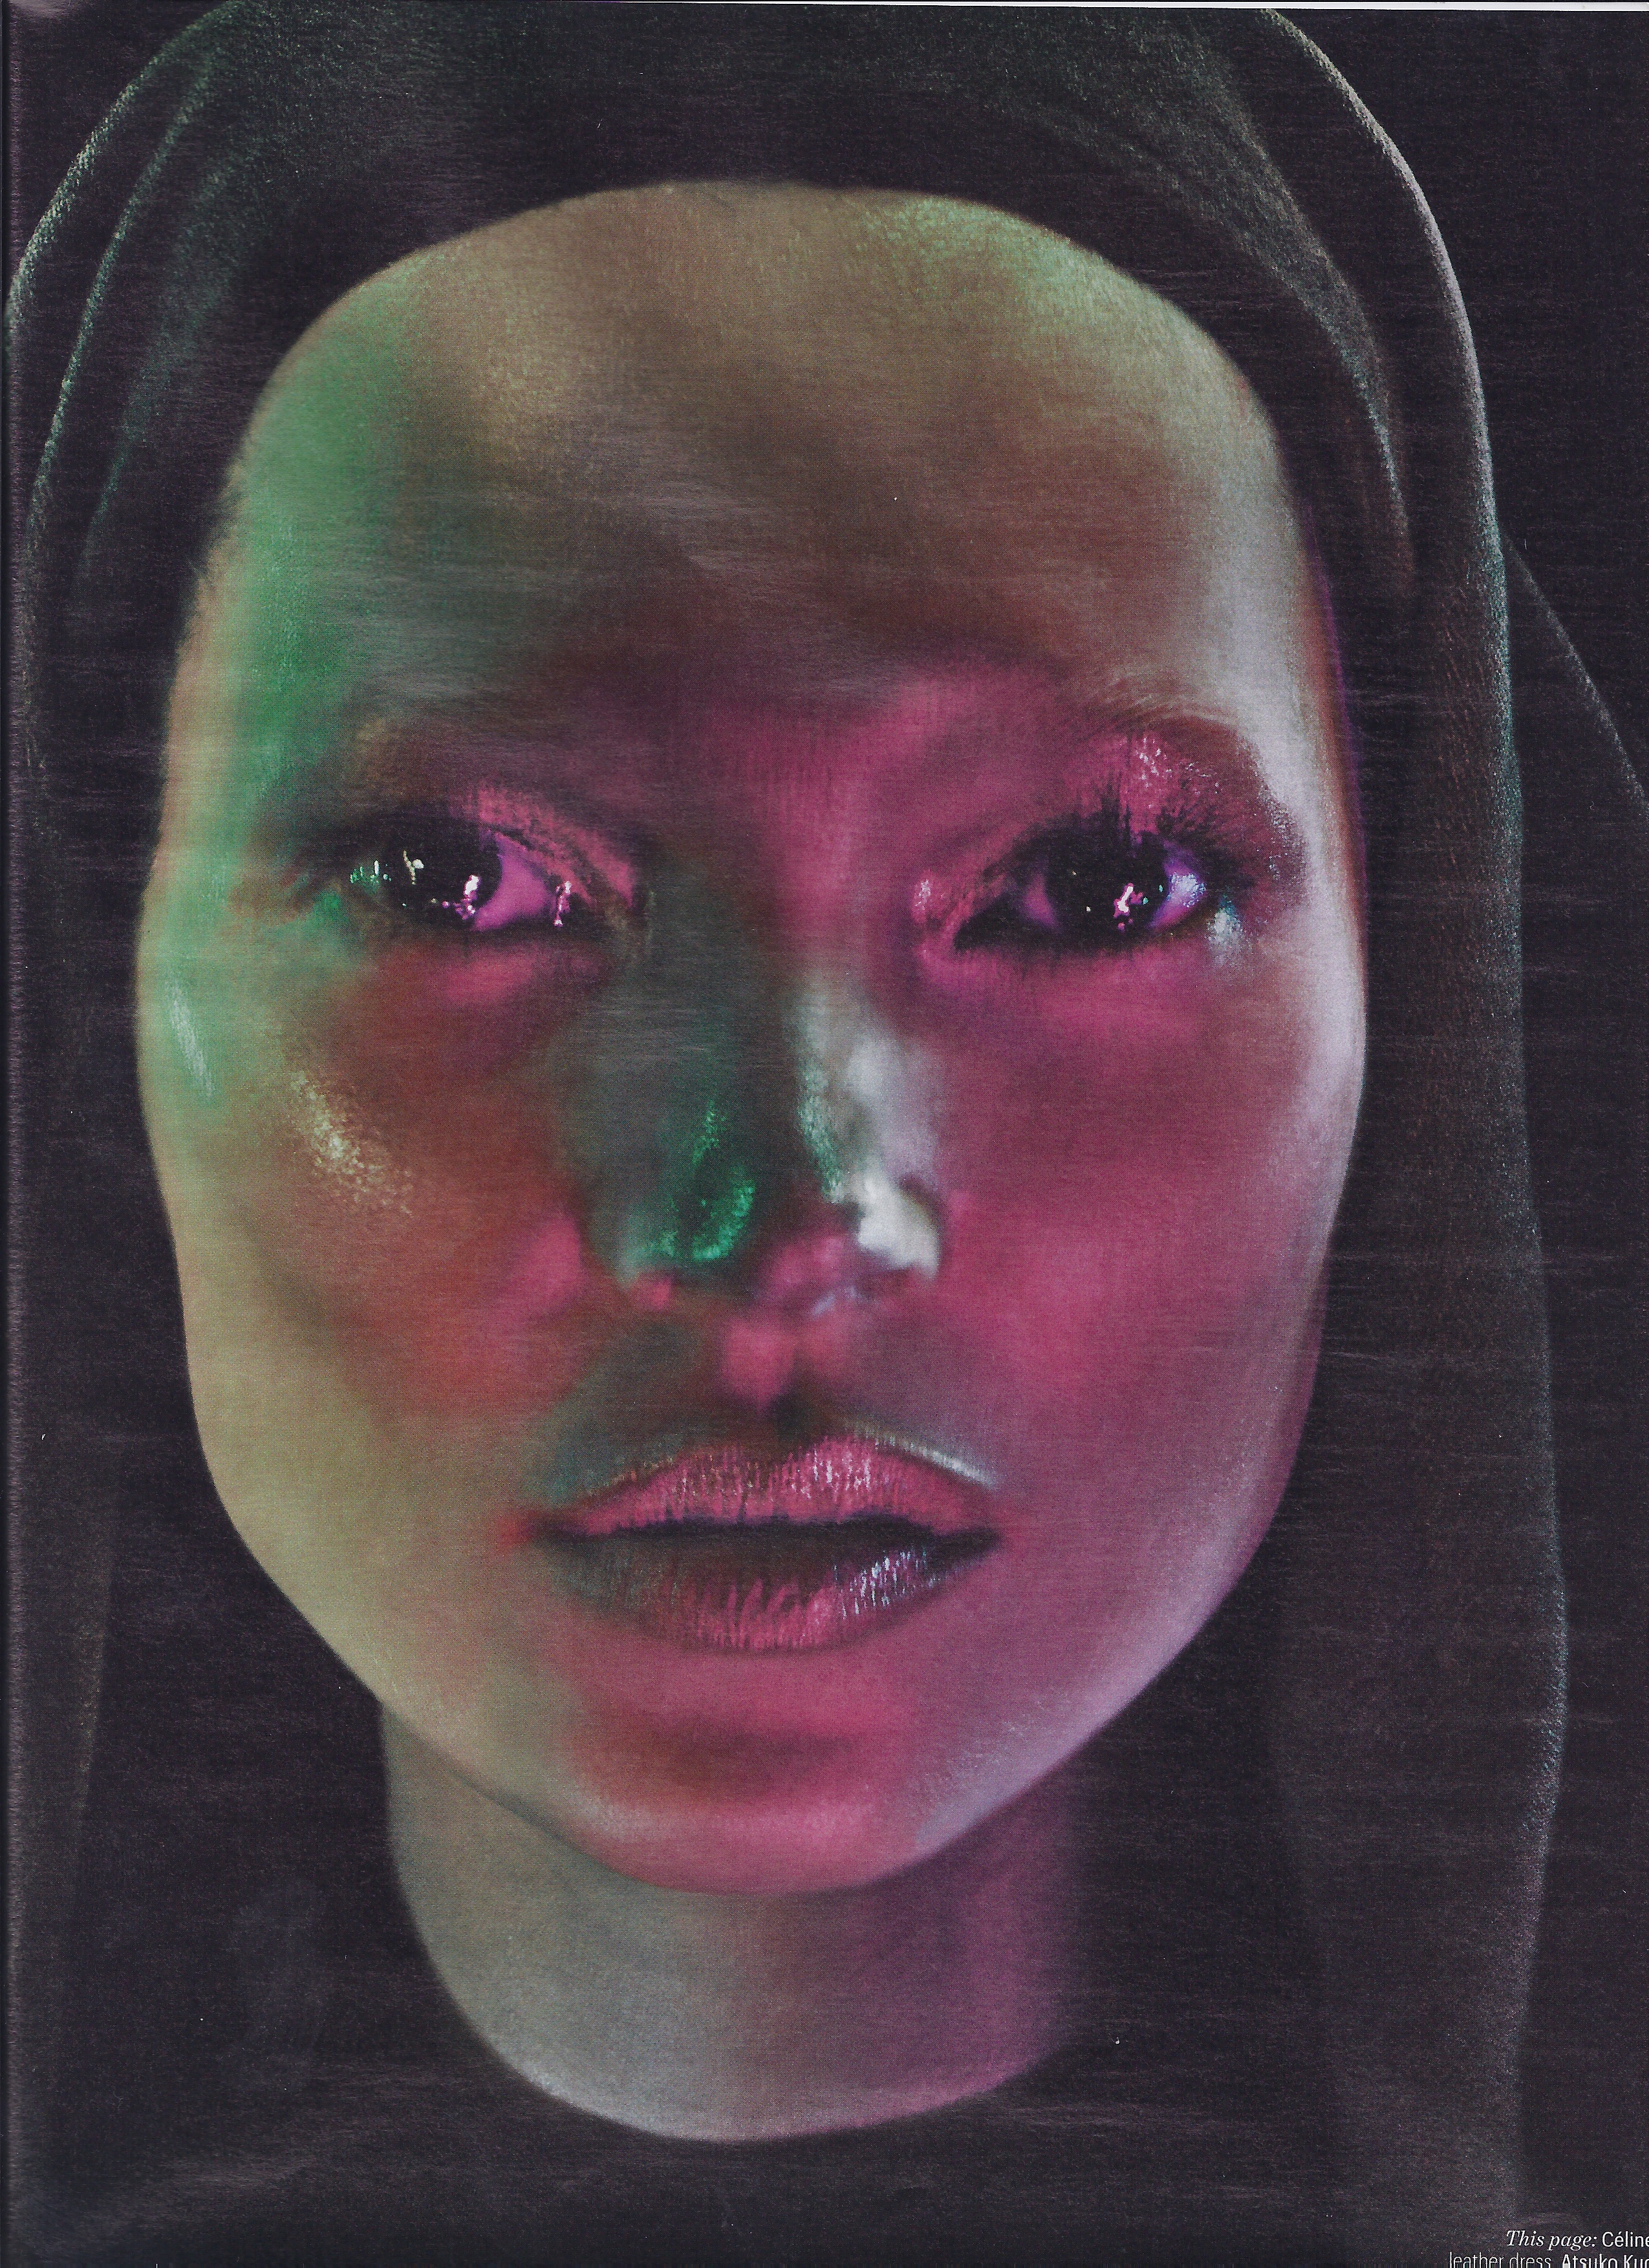 Kate Moss: "W" Magazine, March 2012